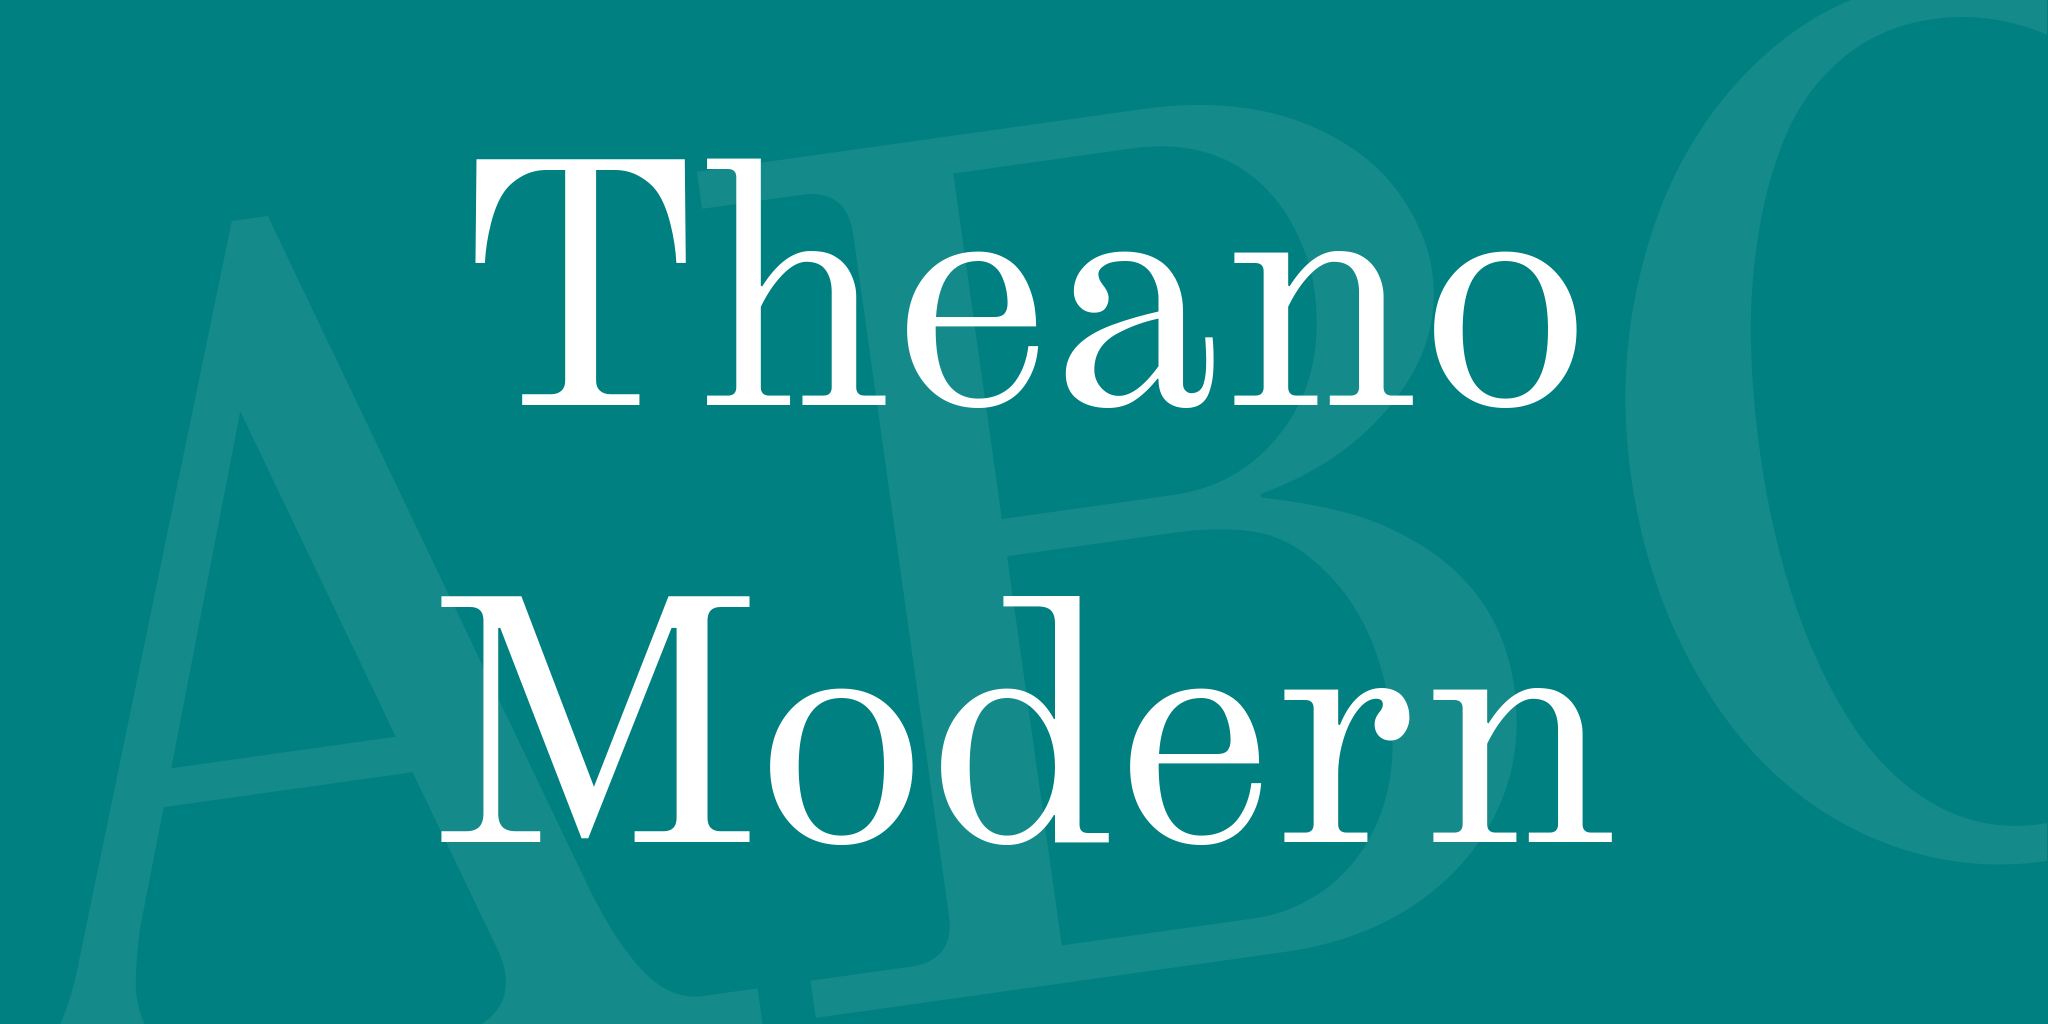 Theano Modern